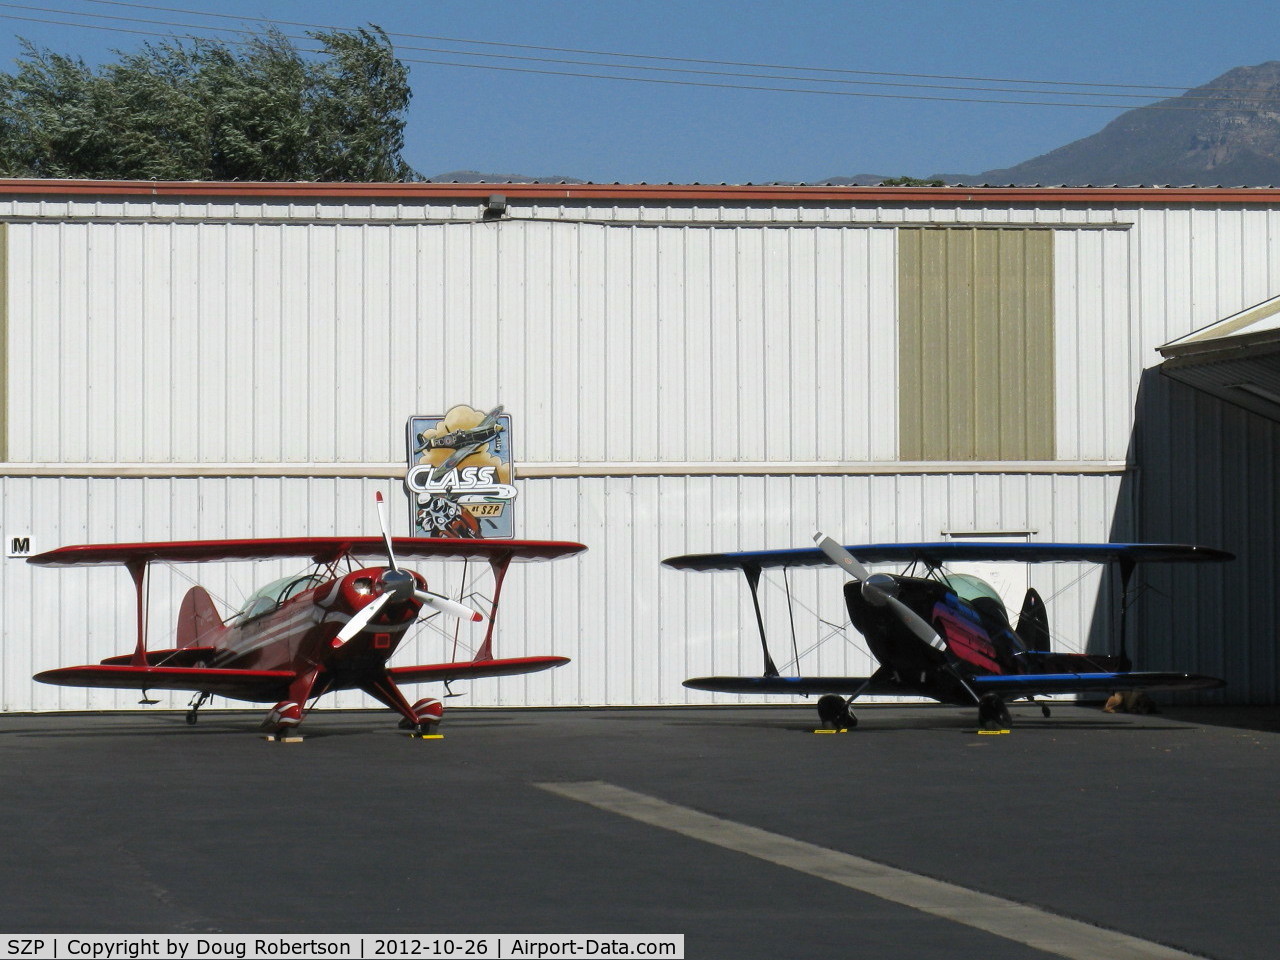 Santa Paula Airport (SZP) - N49BR Christen EAGLE Experimental class and N189PT Aerotek PITTS S-2A Production class aerobatic biplanes share a hangar